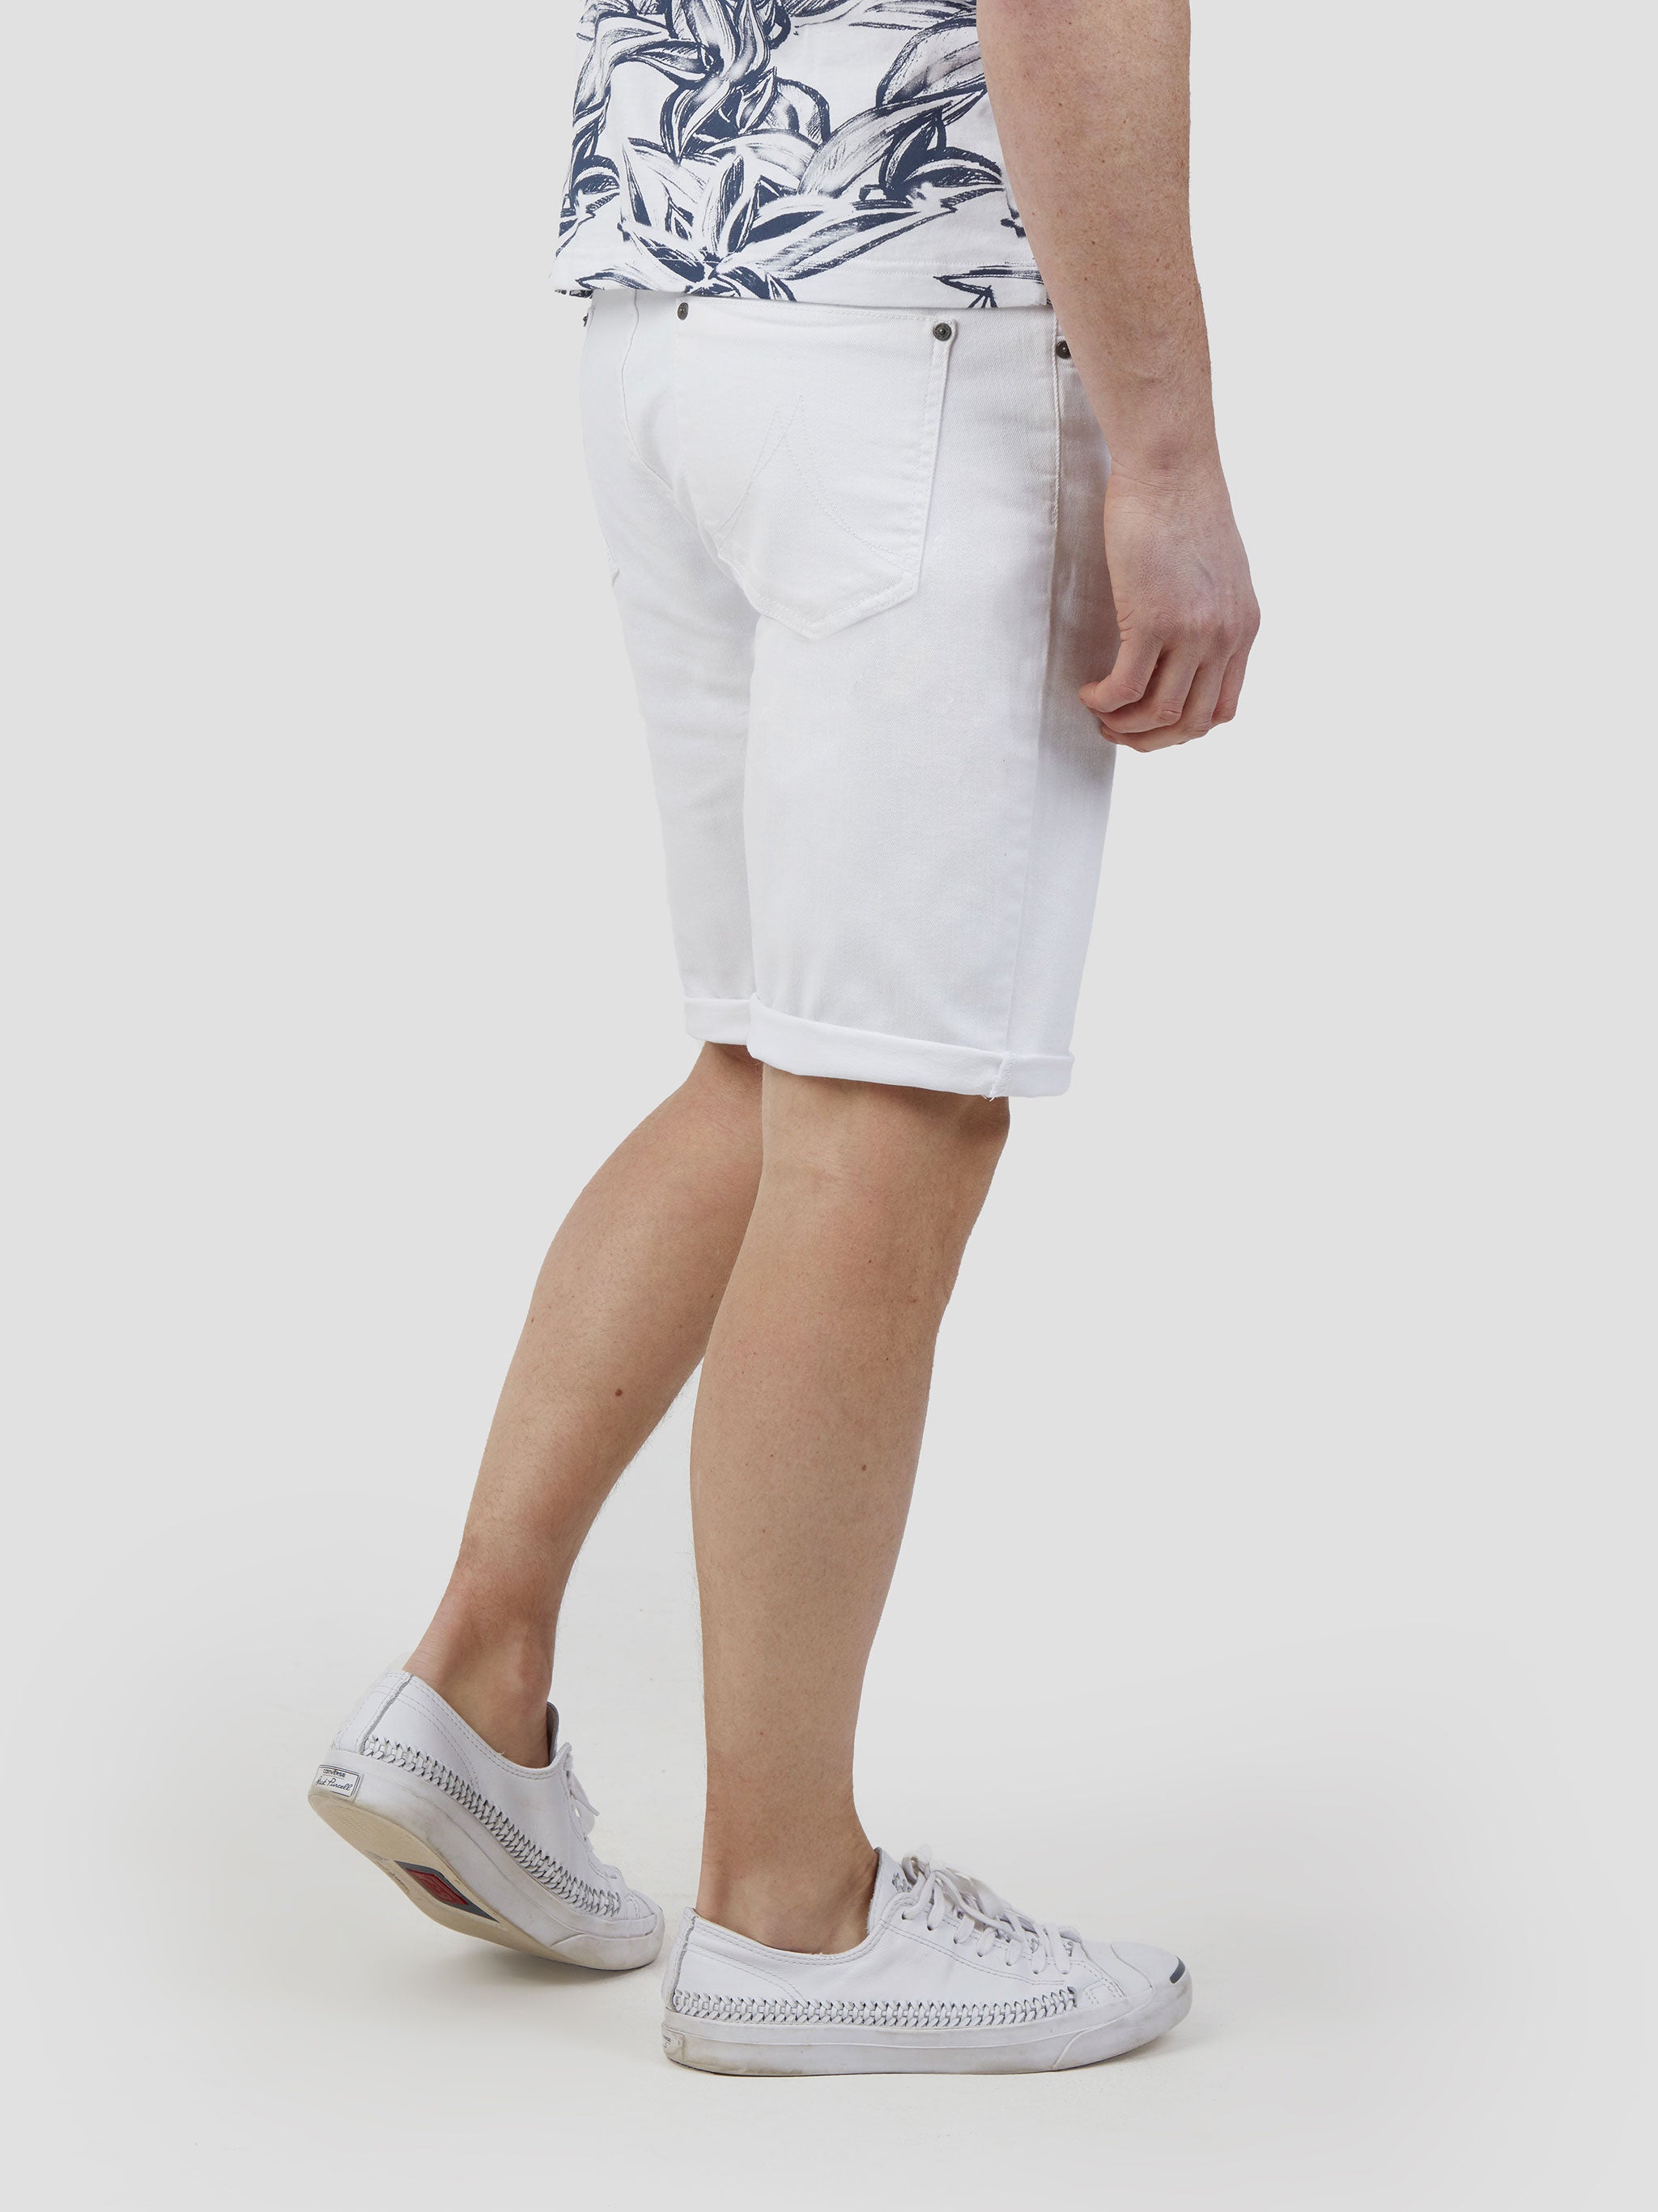 Hot6sl Cargo Shorts for Men, Lightweight Short Pants 100% Cotton Army Green  L #3 - Walmart.com